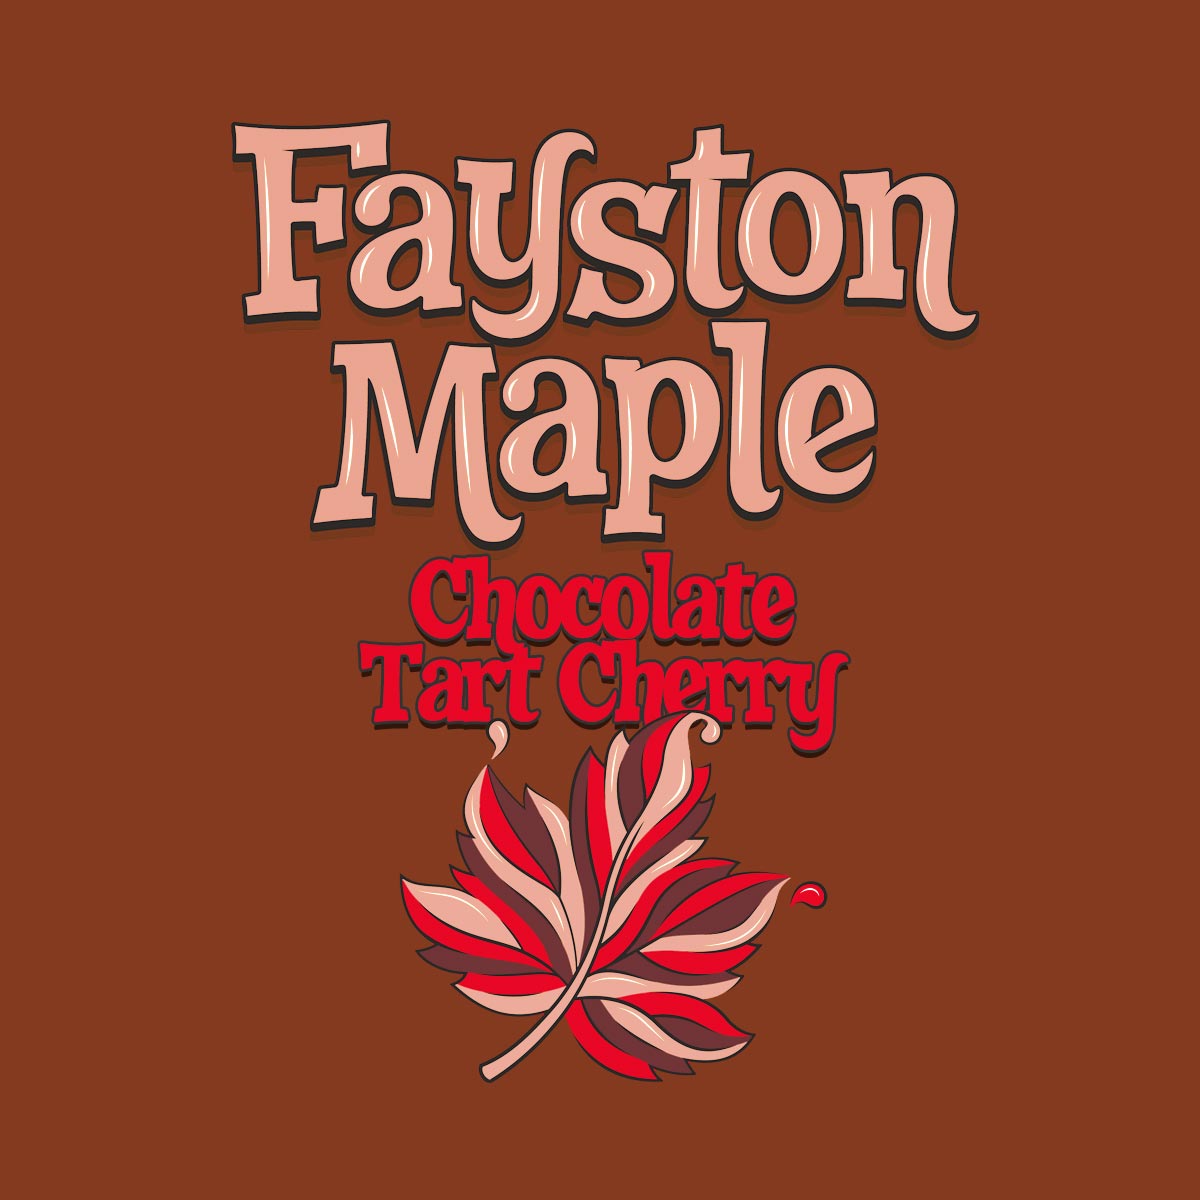 Fayston Maple Chocolate Tart Cherry